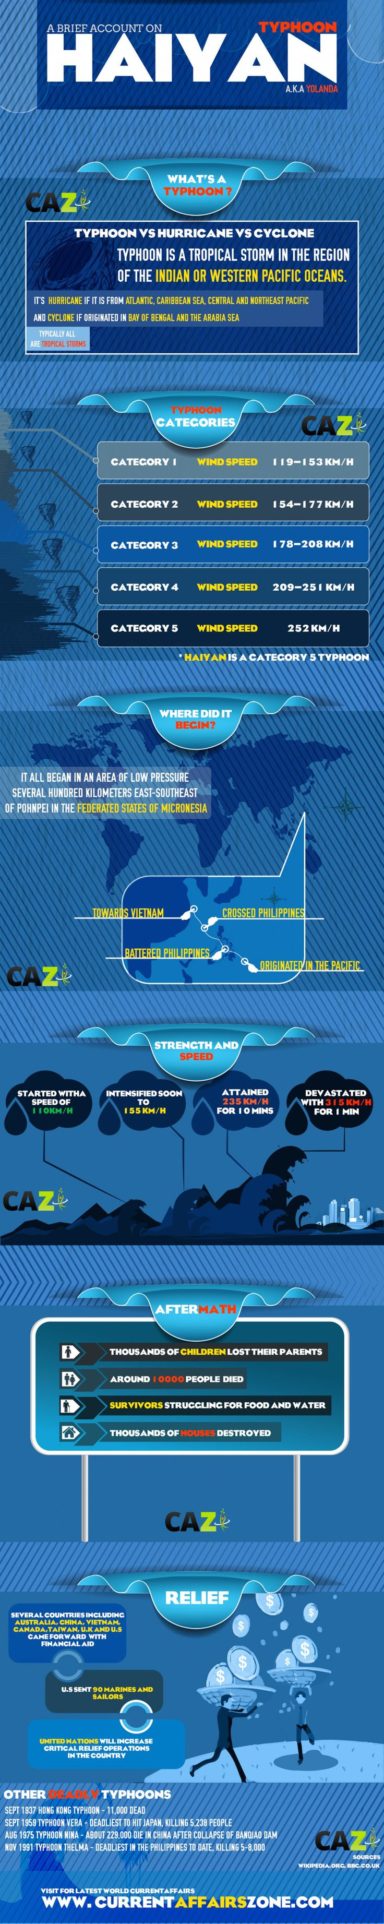 Typhoon Haiyan (Yolanda) Infographic